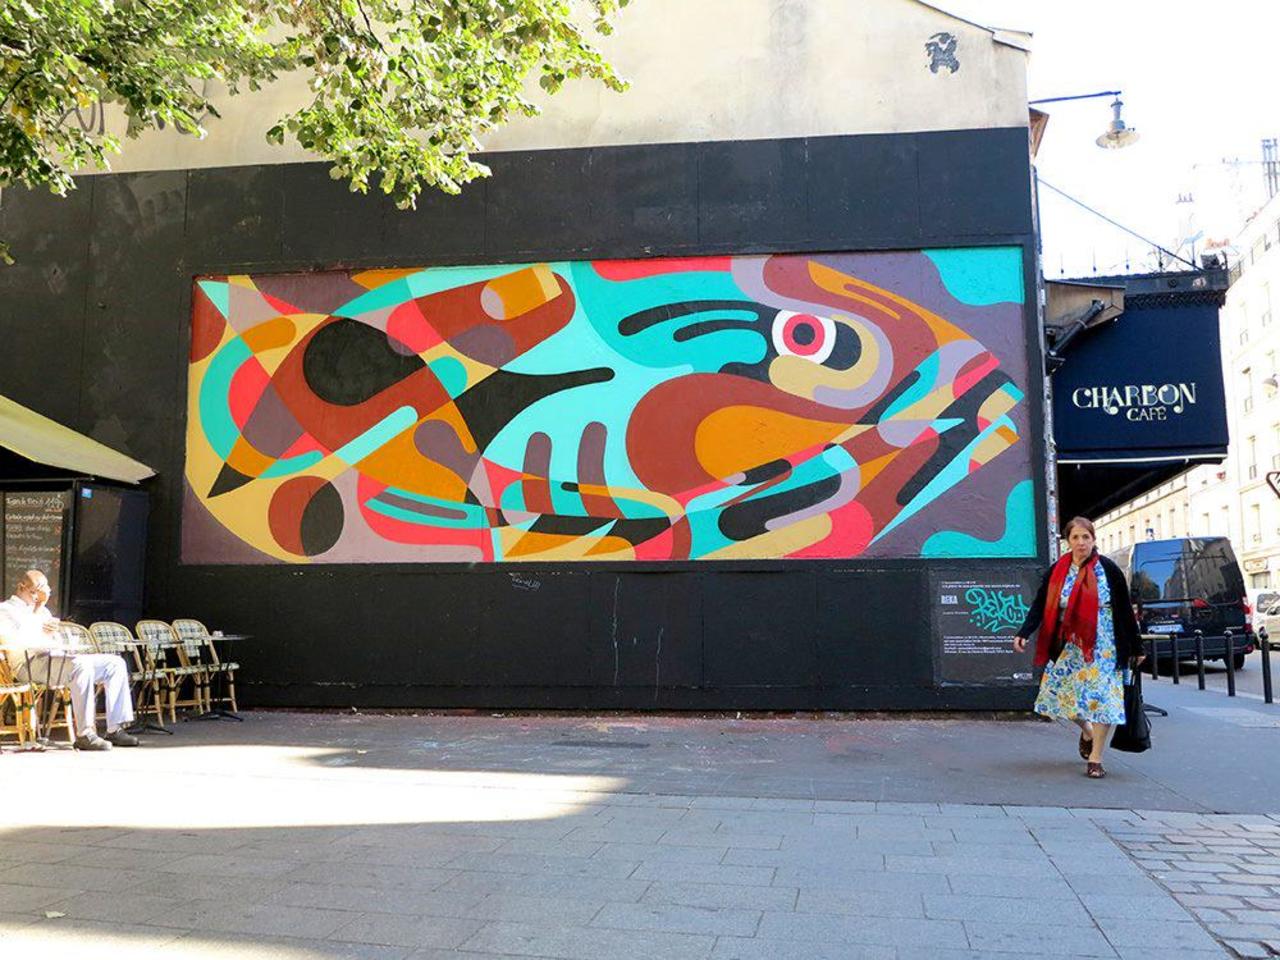 Reka One creates a new mural in Paris for Le Mur. #StreetArt #Graffiti #Mural http://t.co/PWRBBTjXeR